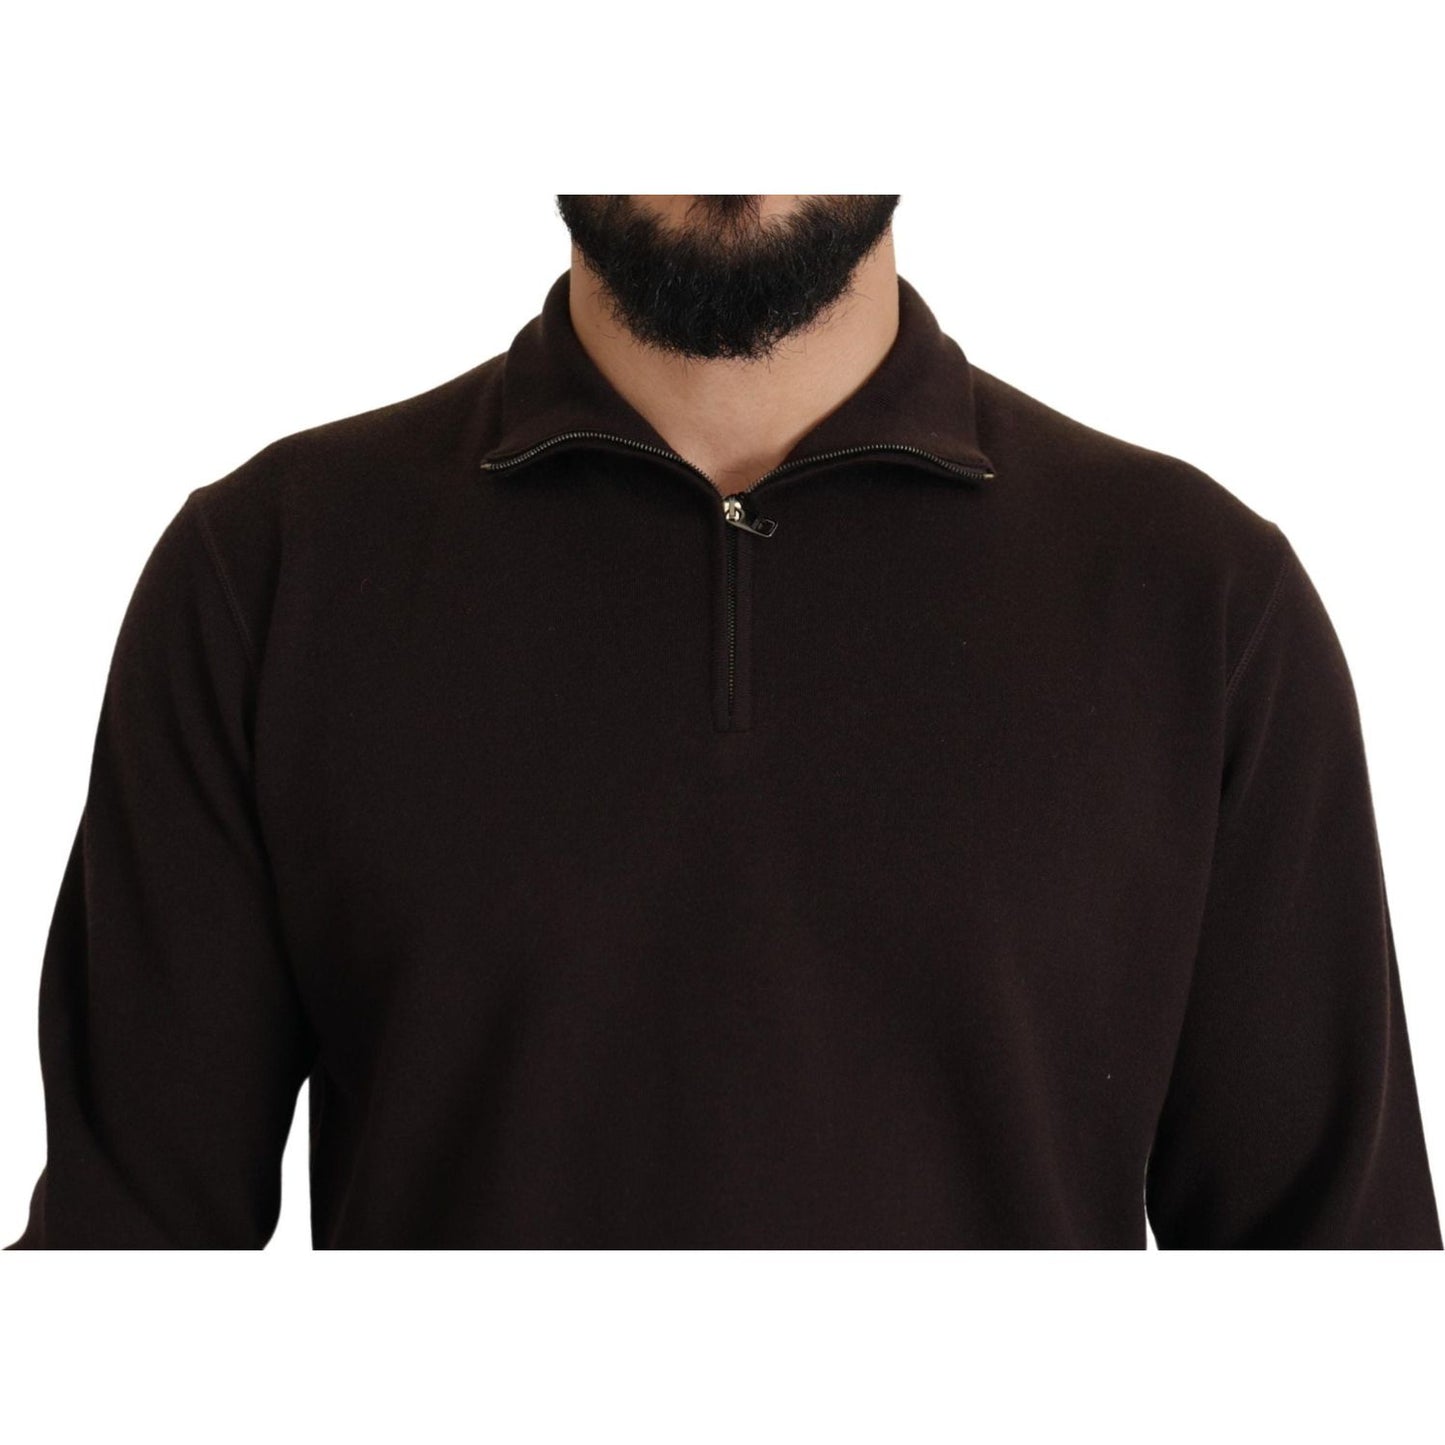 Dolce & Gabbana Elegant Cashmere Zippered Pullover Sweater brown-cashmere-collared-pullover-sweater